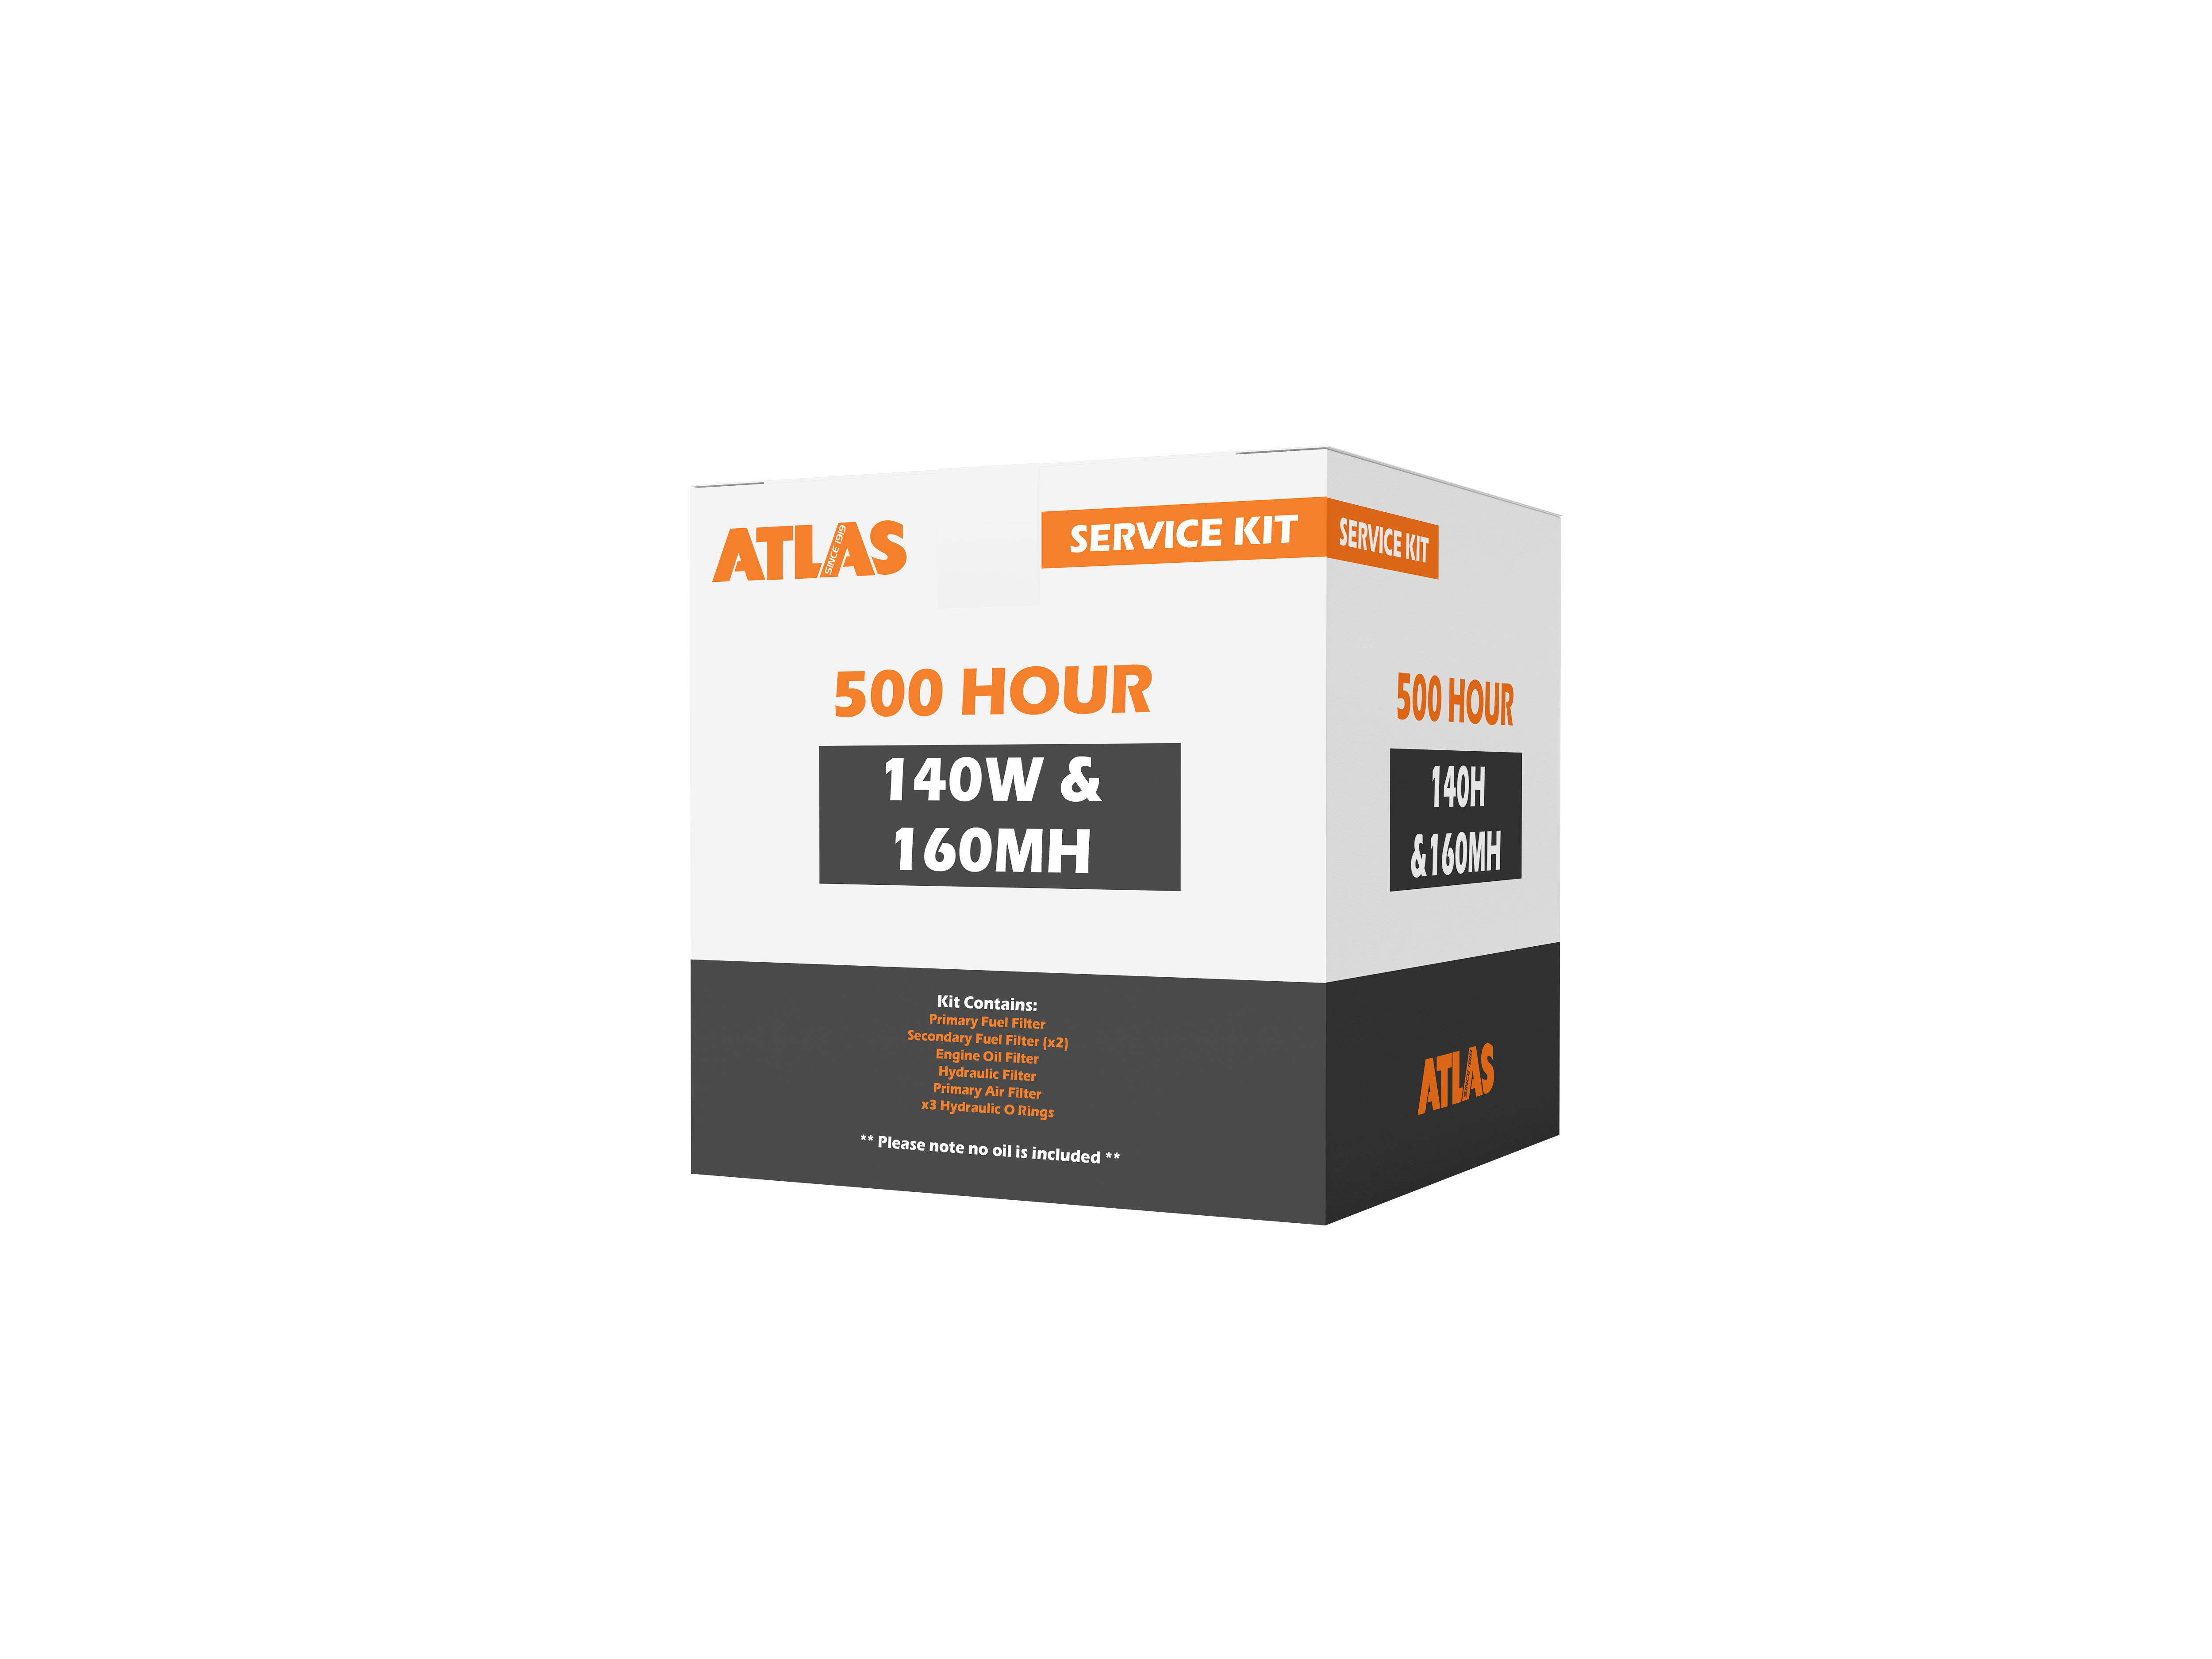 Atlas 140W & 160MH 500 Hour Service Kit